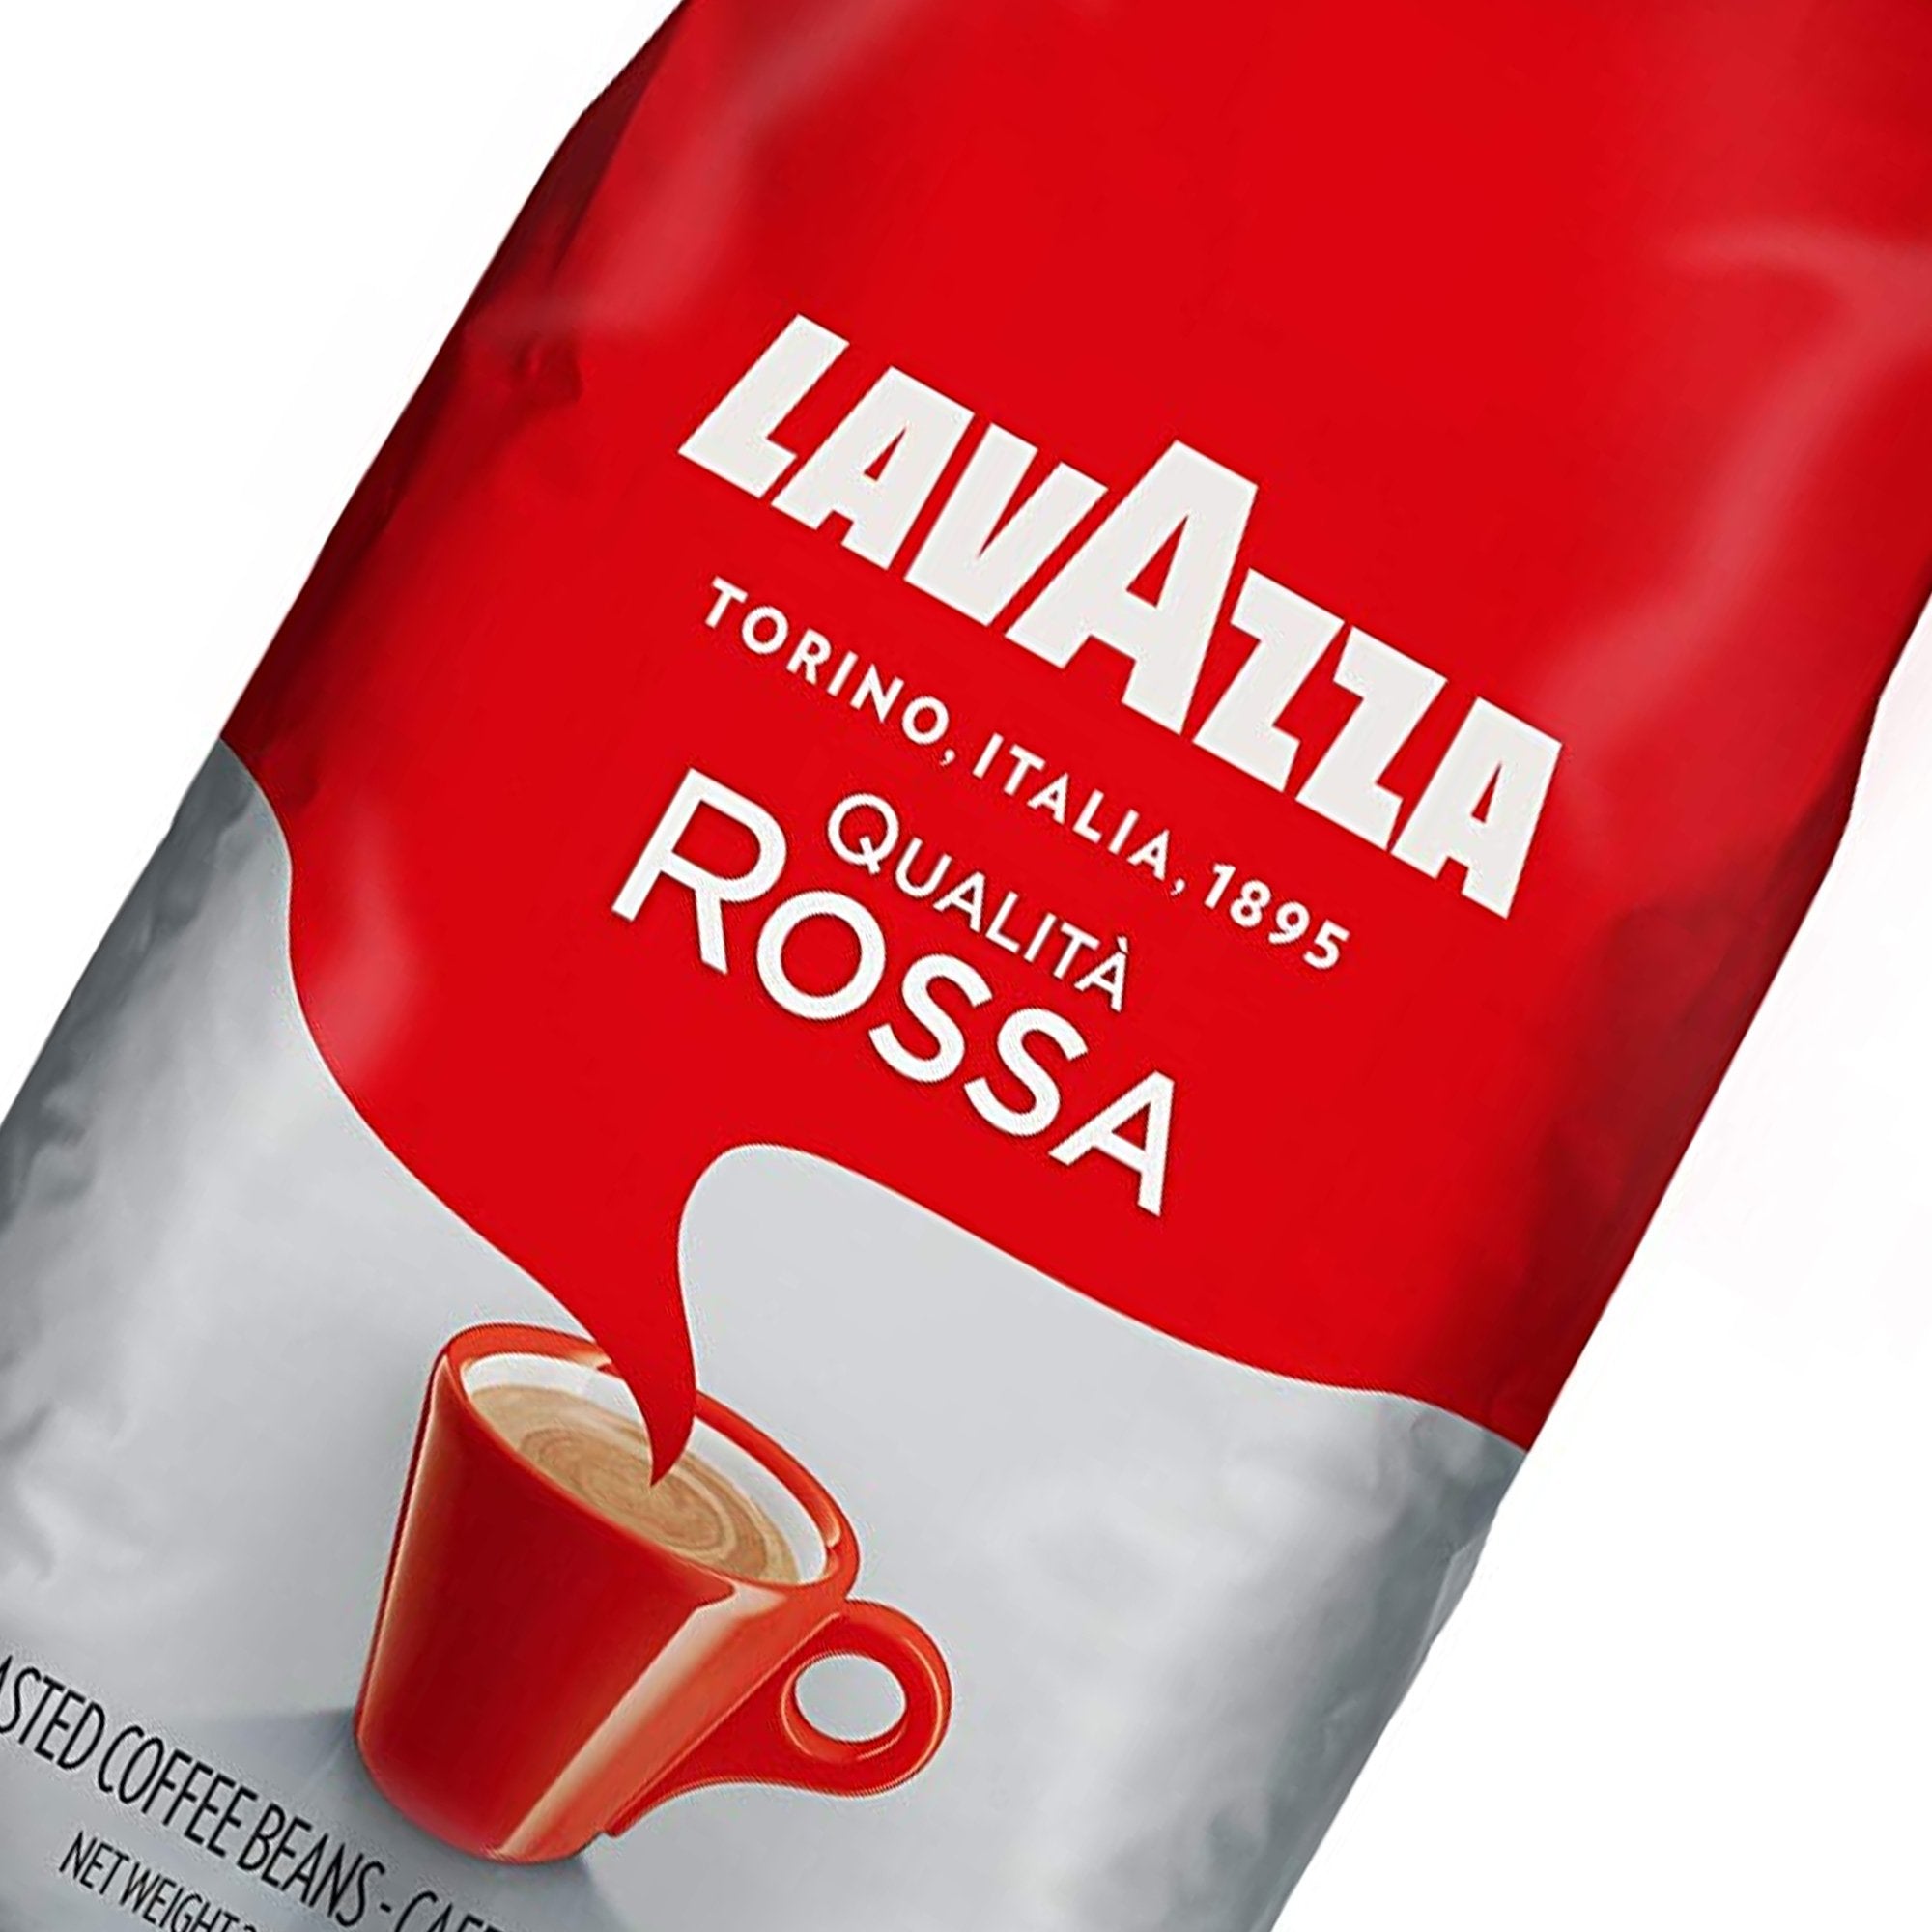 Lavazza Qualita Rossa Coffee Beans